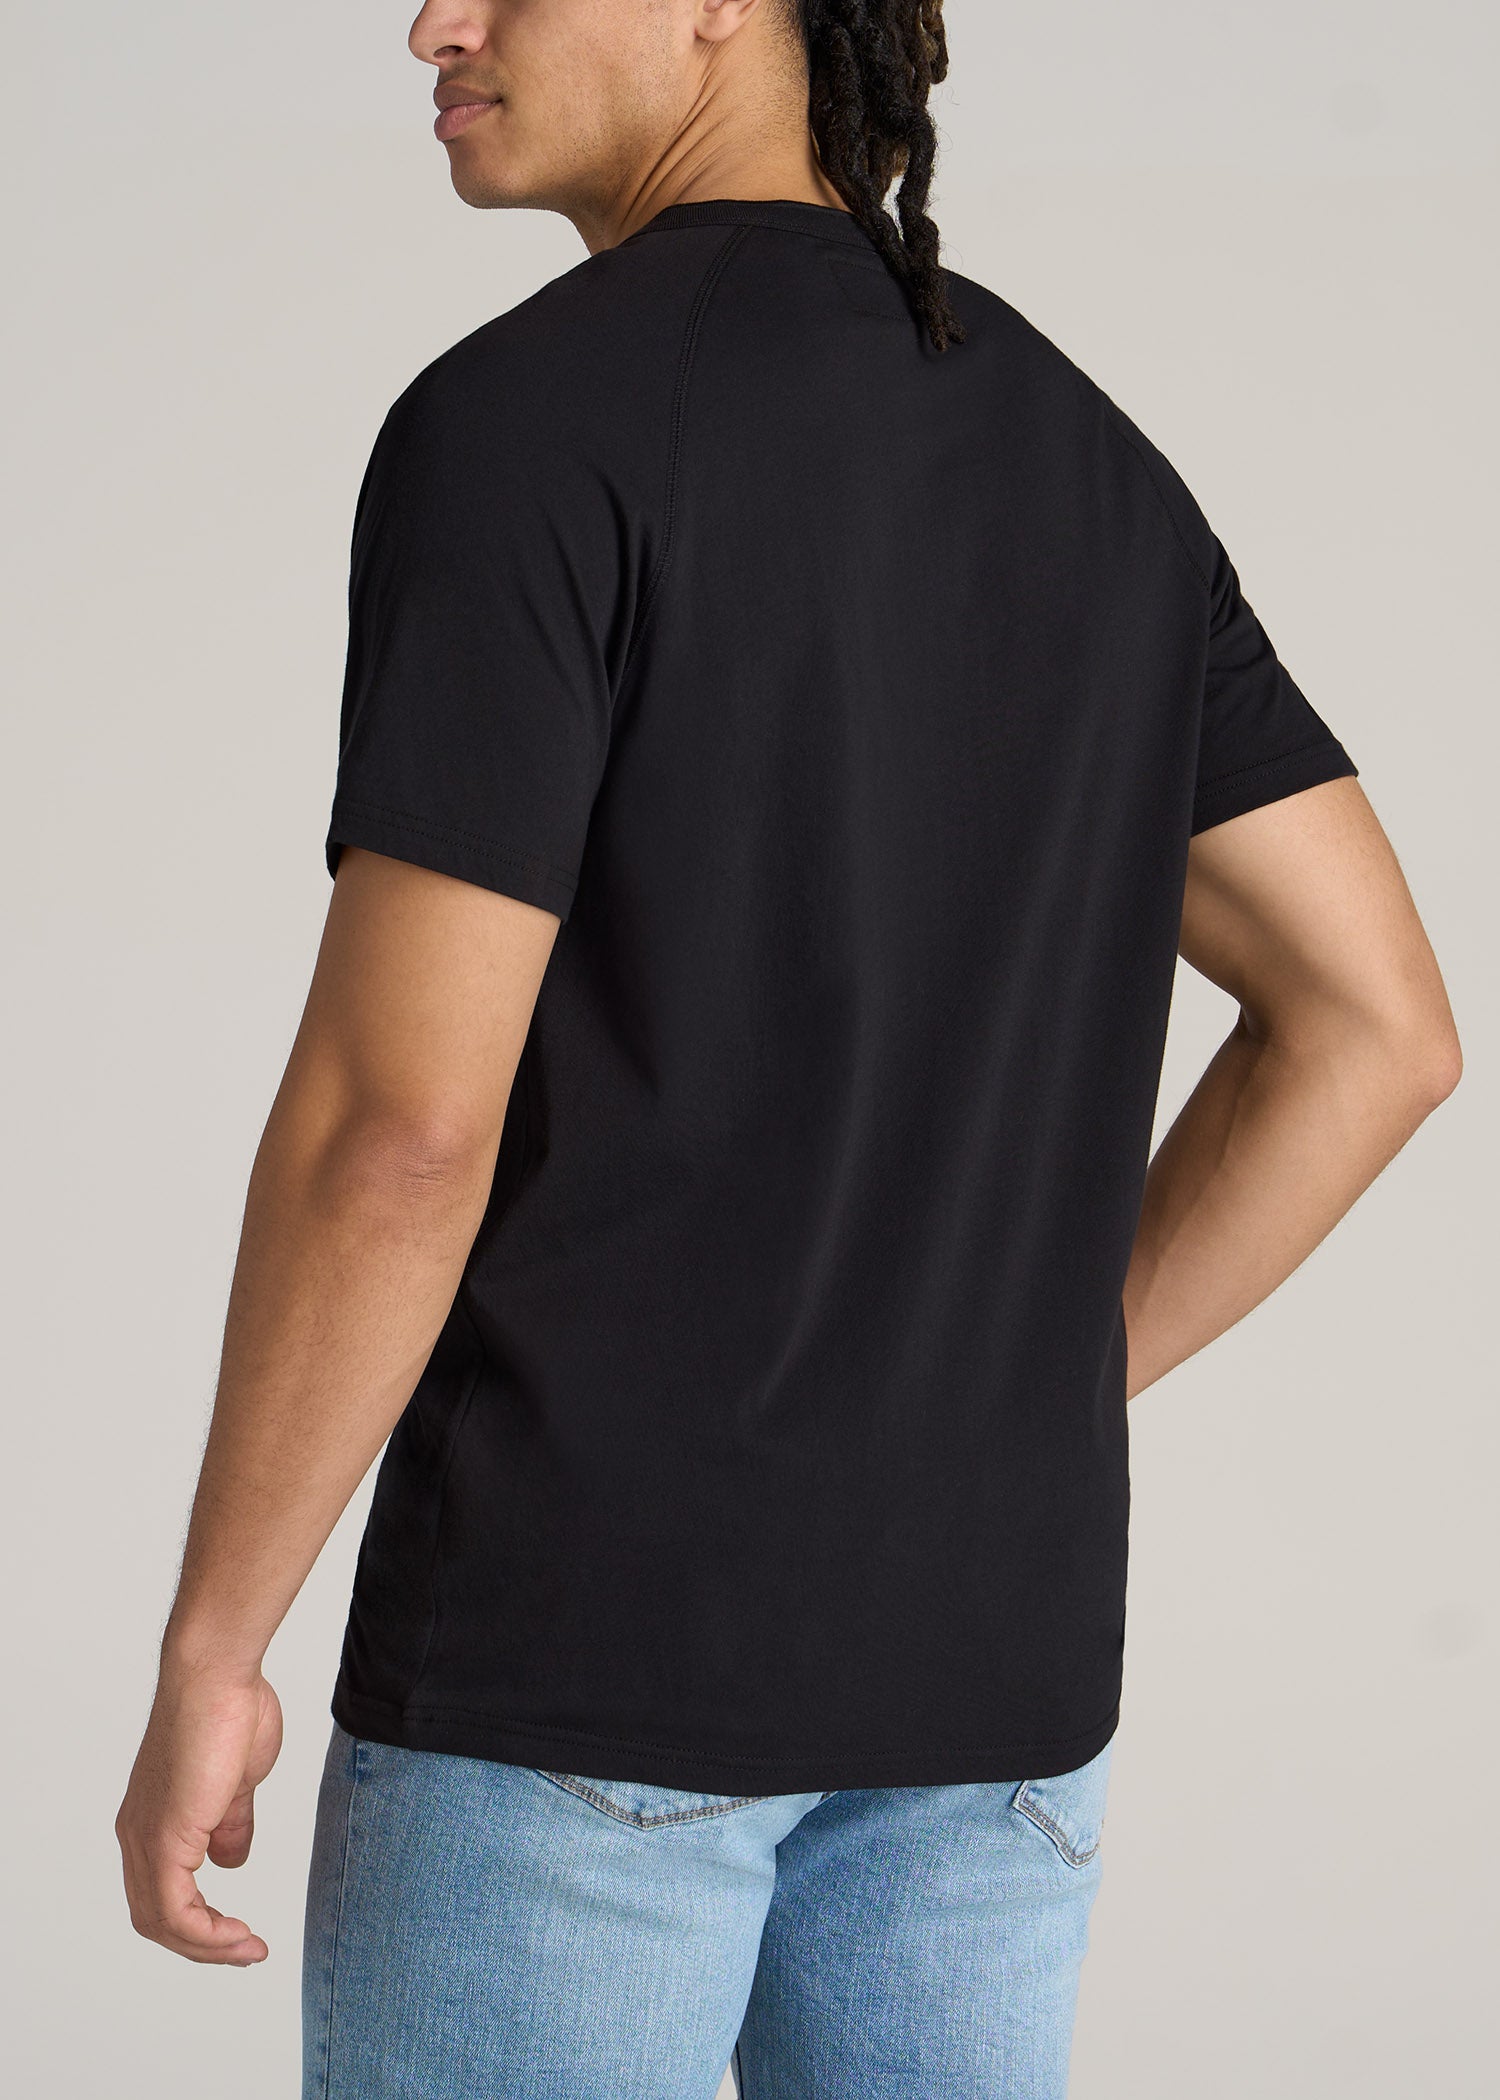 Men's Tall T Shirts: Jersey Henley Black Tee | American Tall